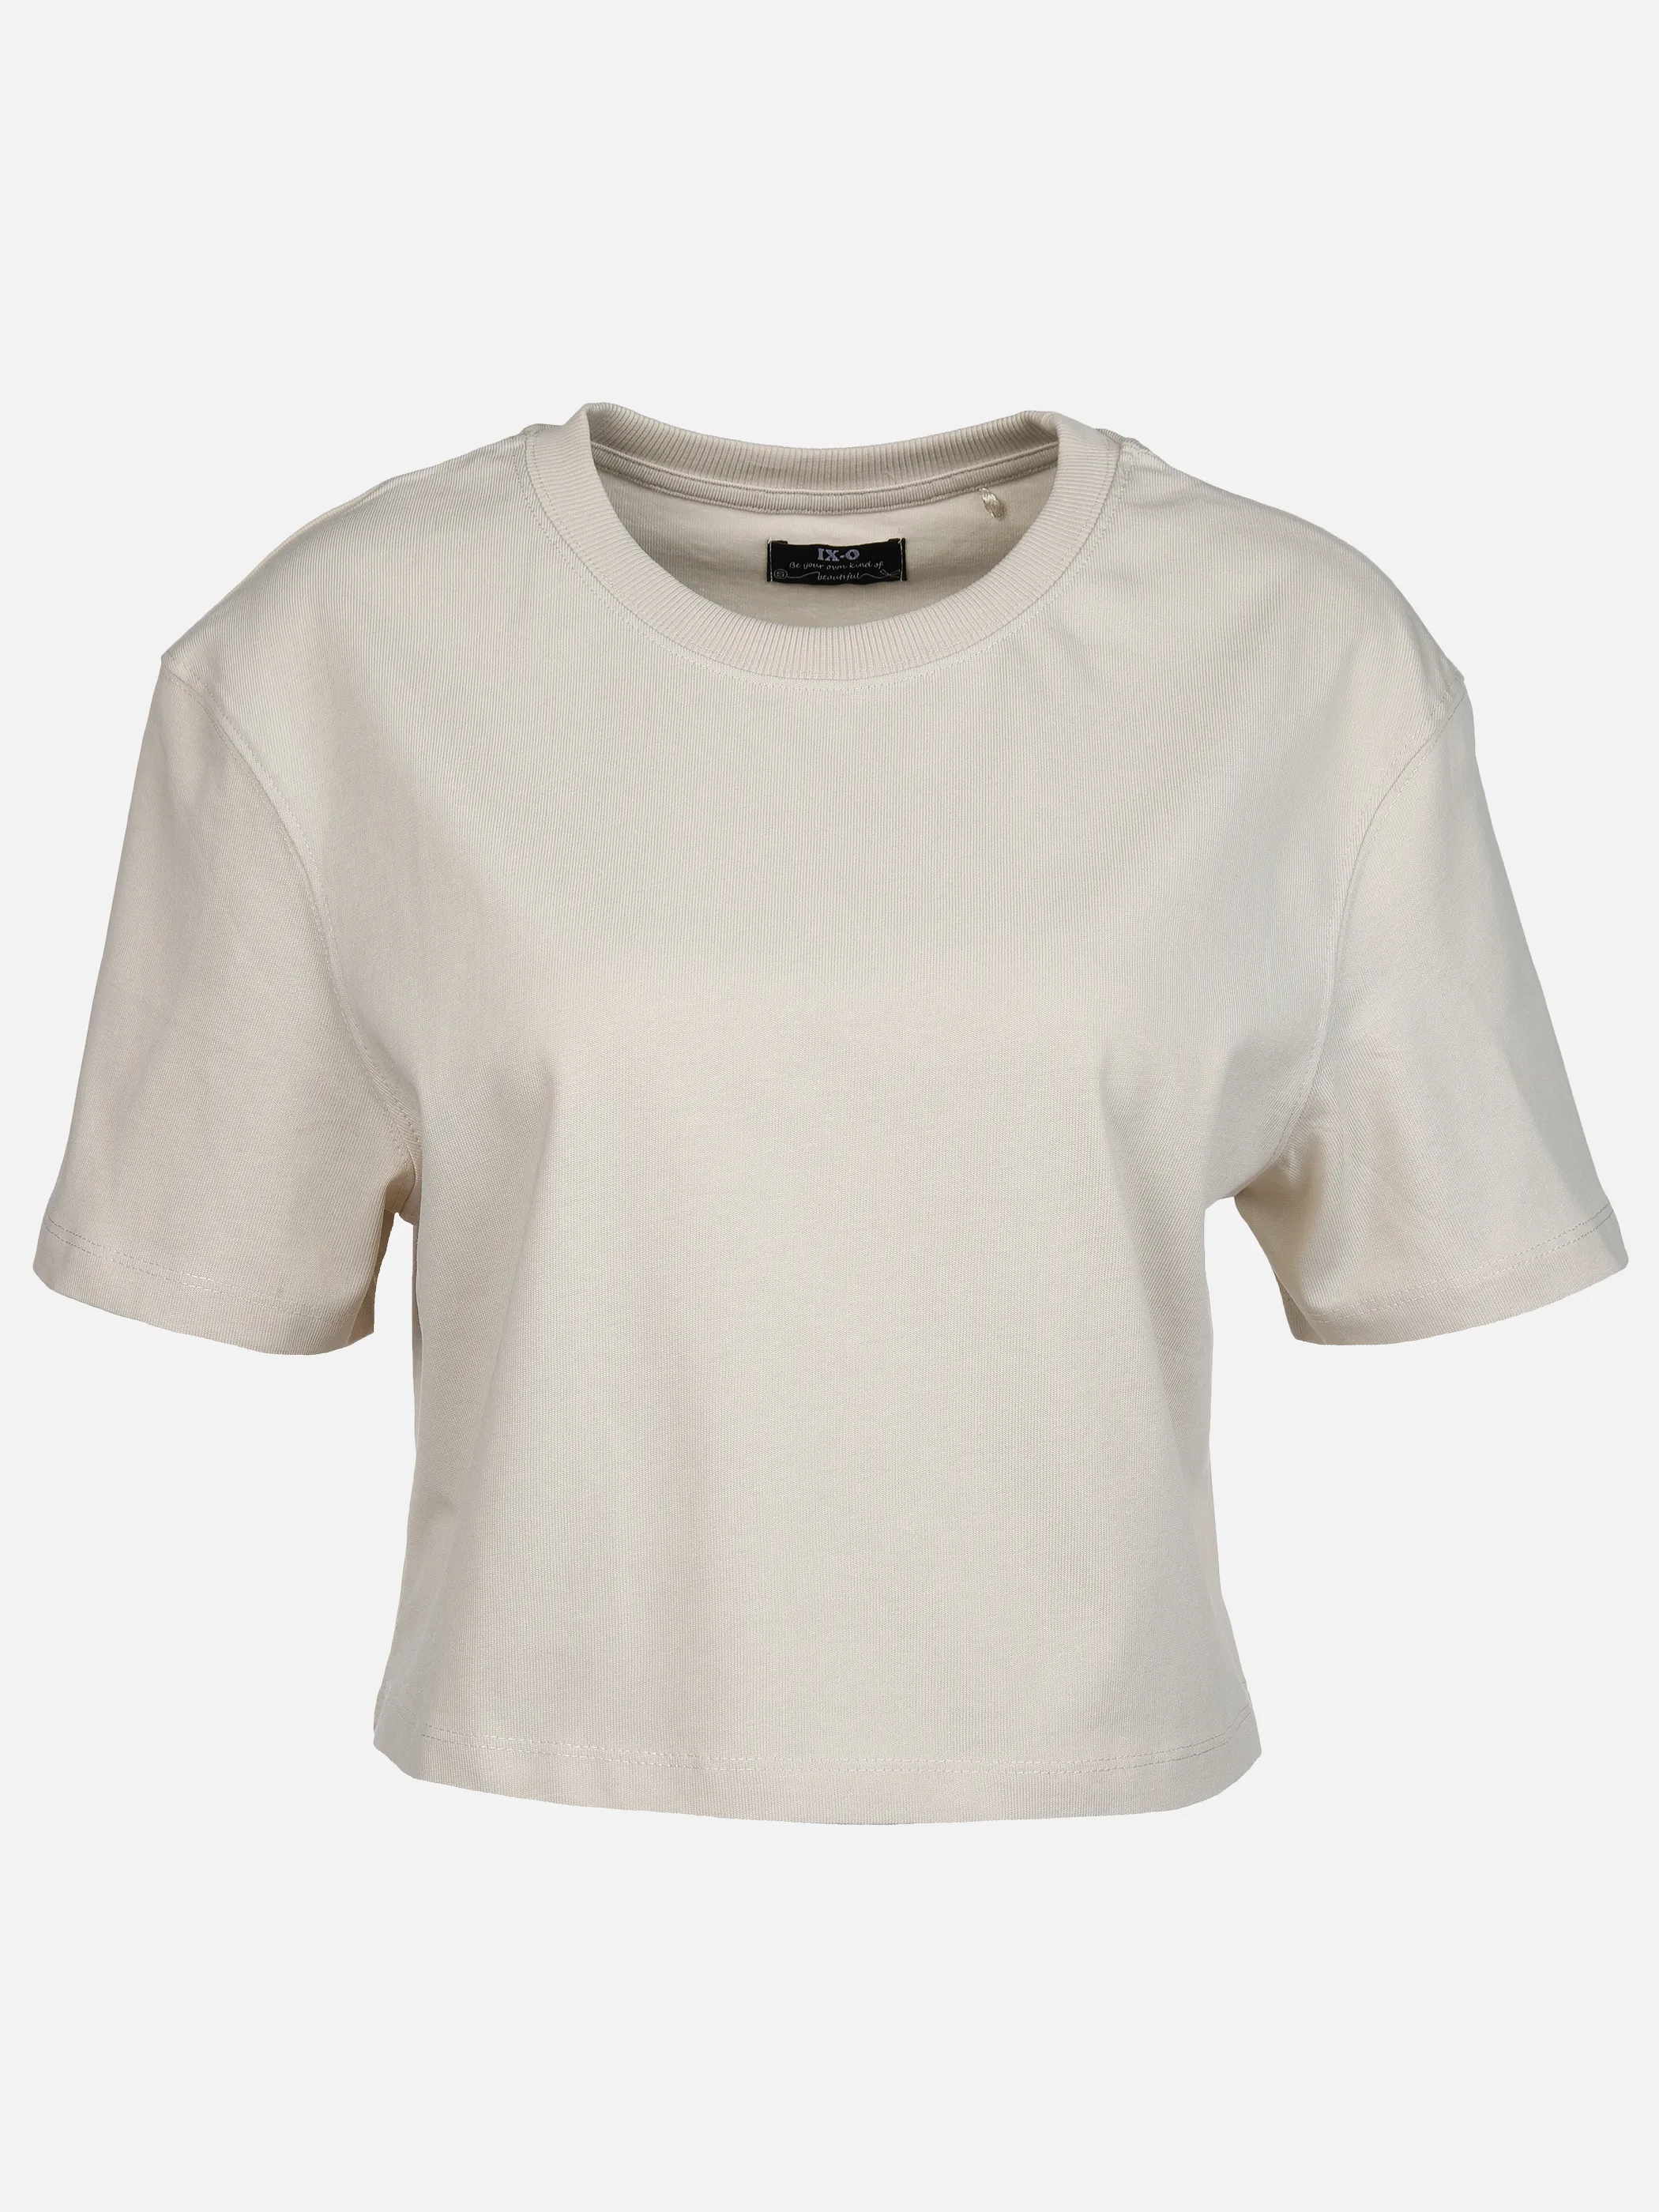 IX-O YF-Da T-Shirt Beige 890371 BEIGE 1